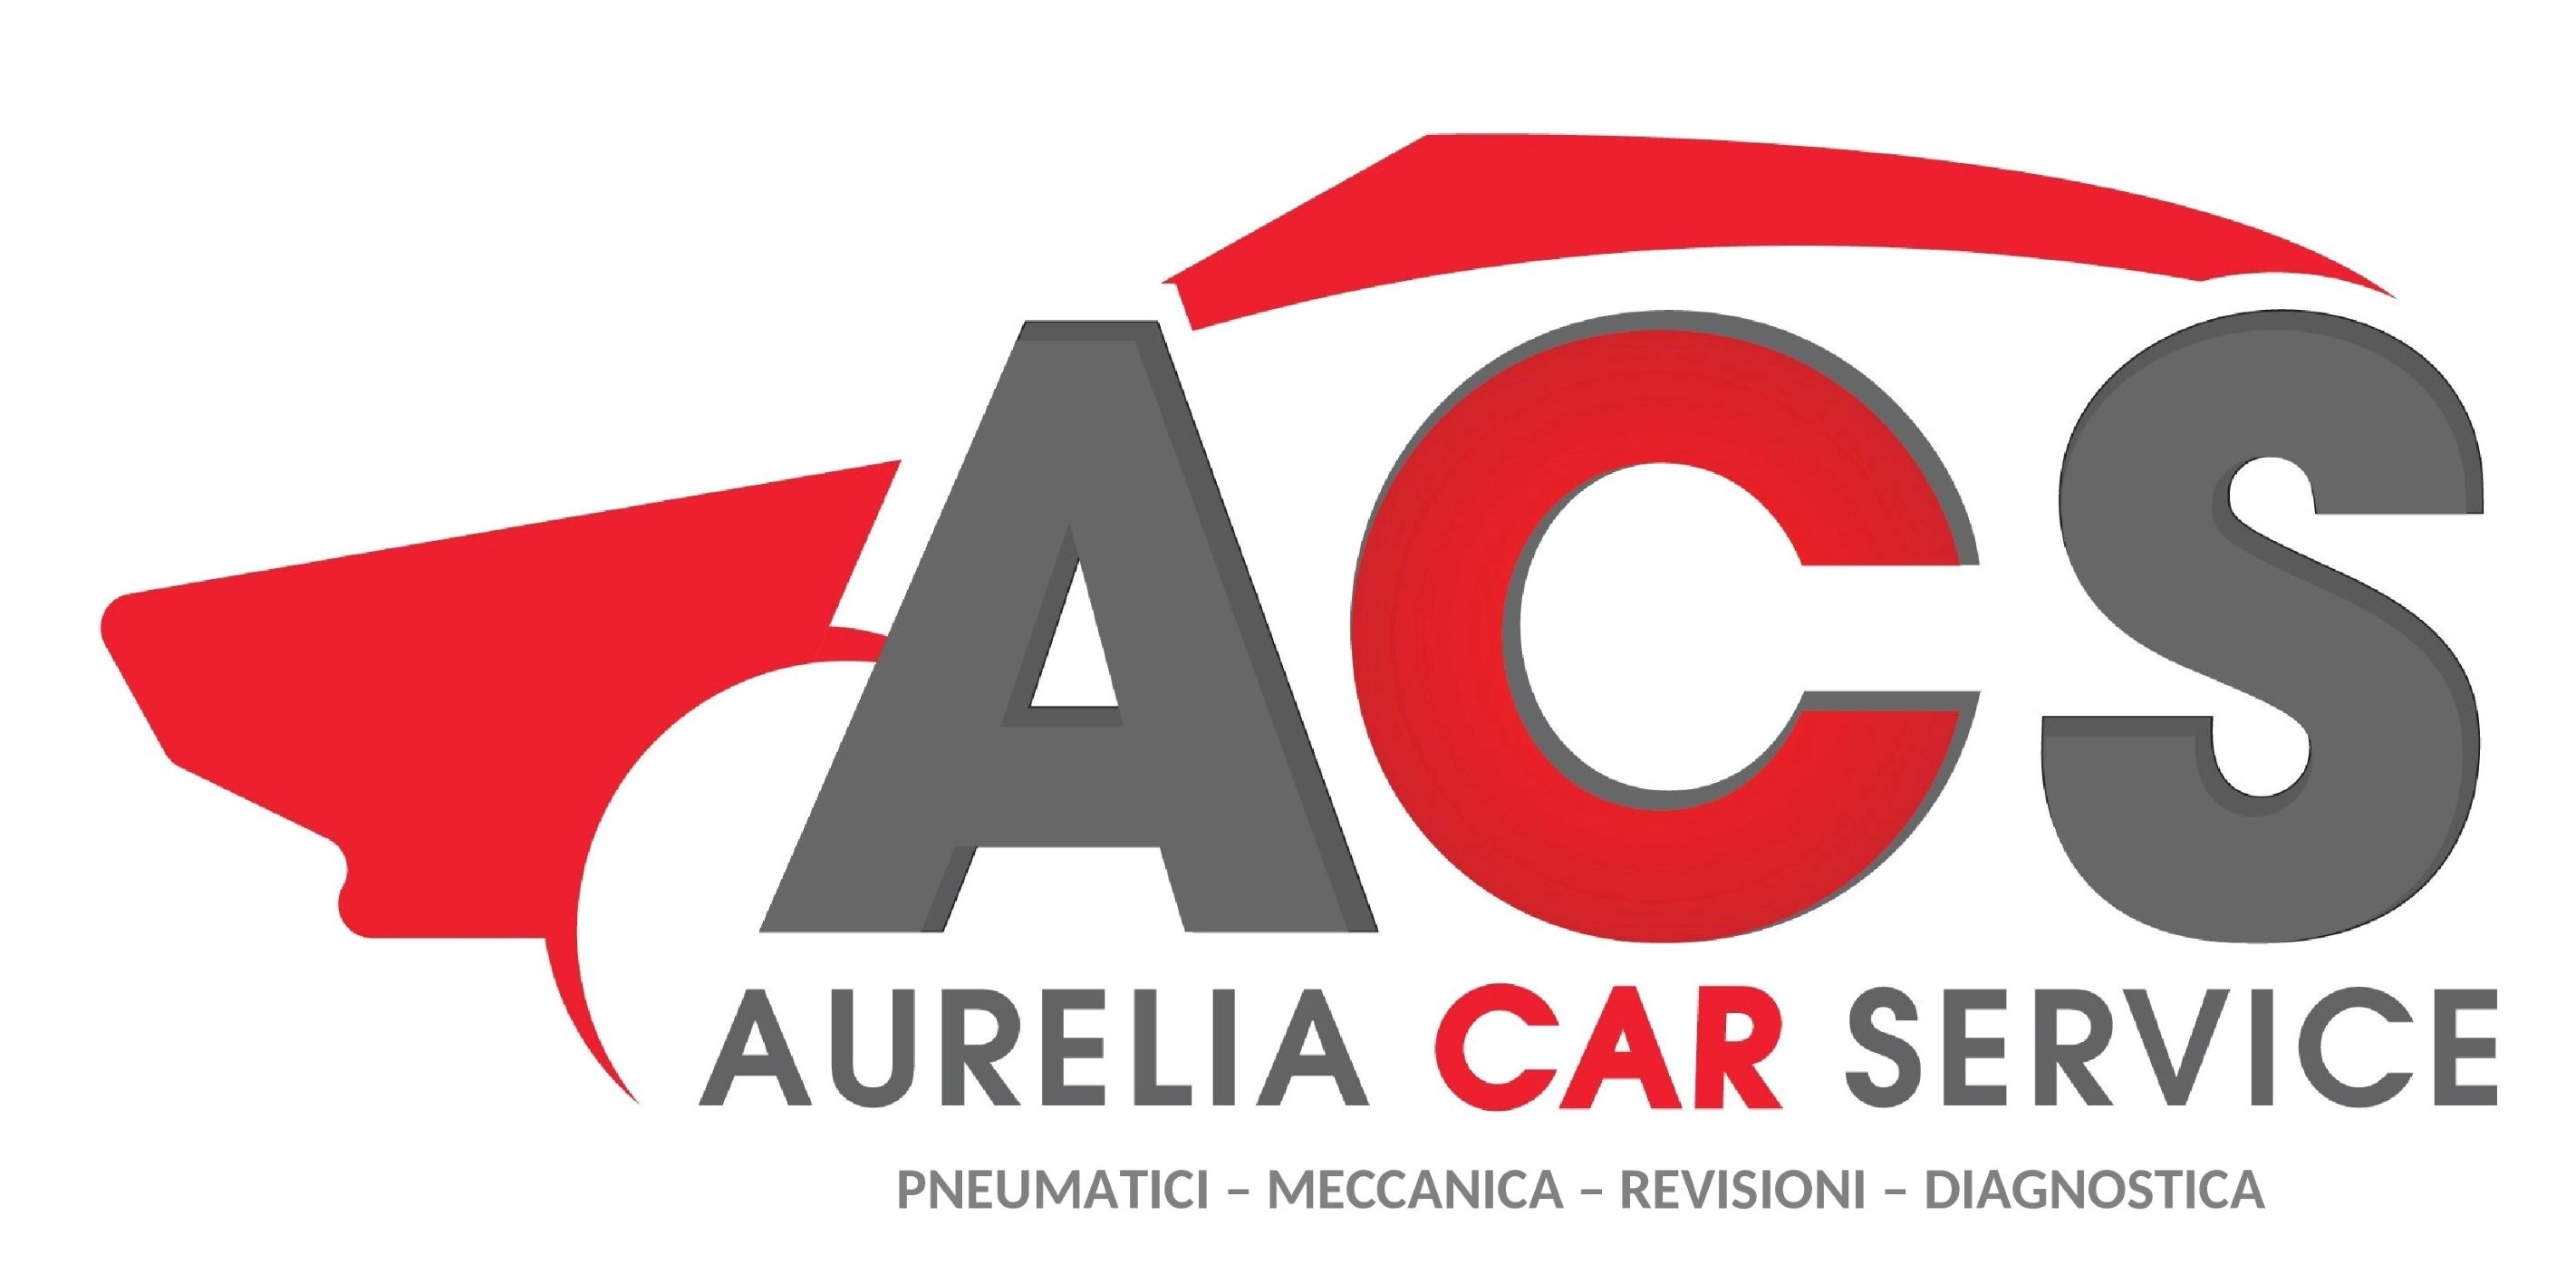 AURELIA CAR SERVICE